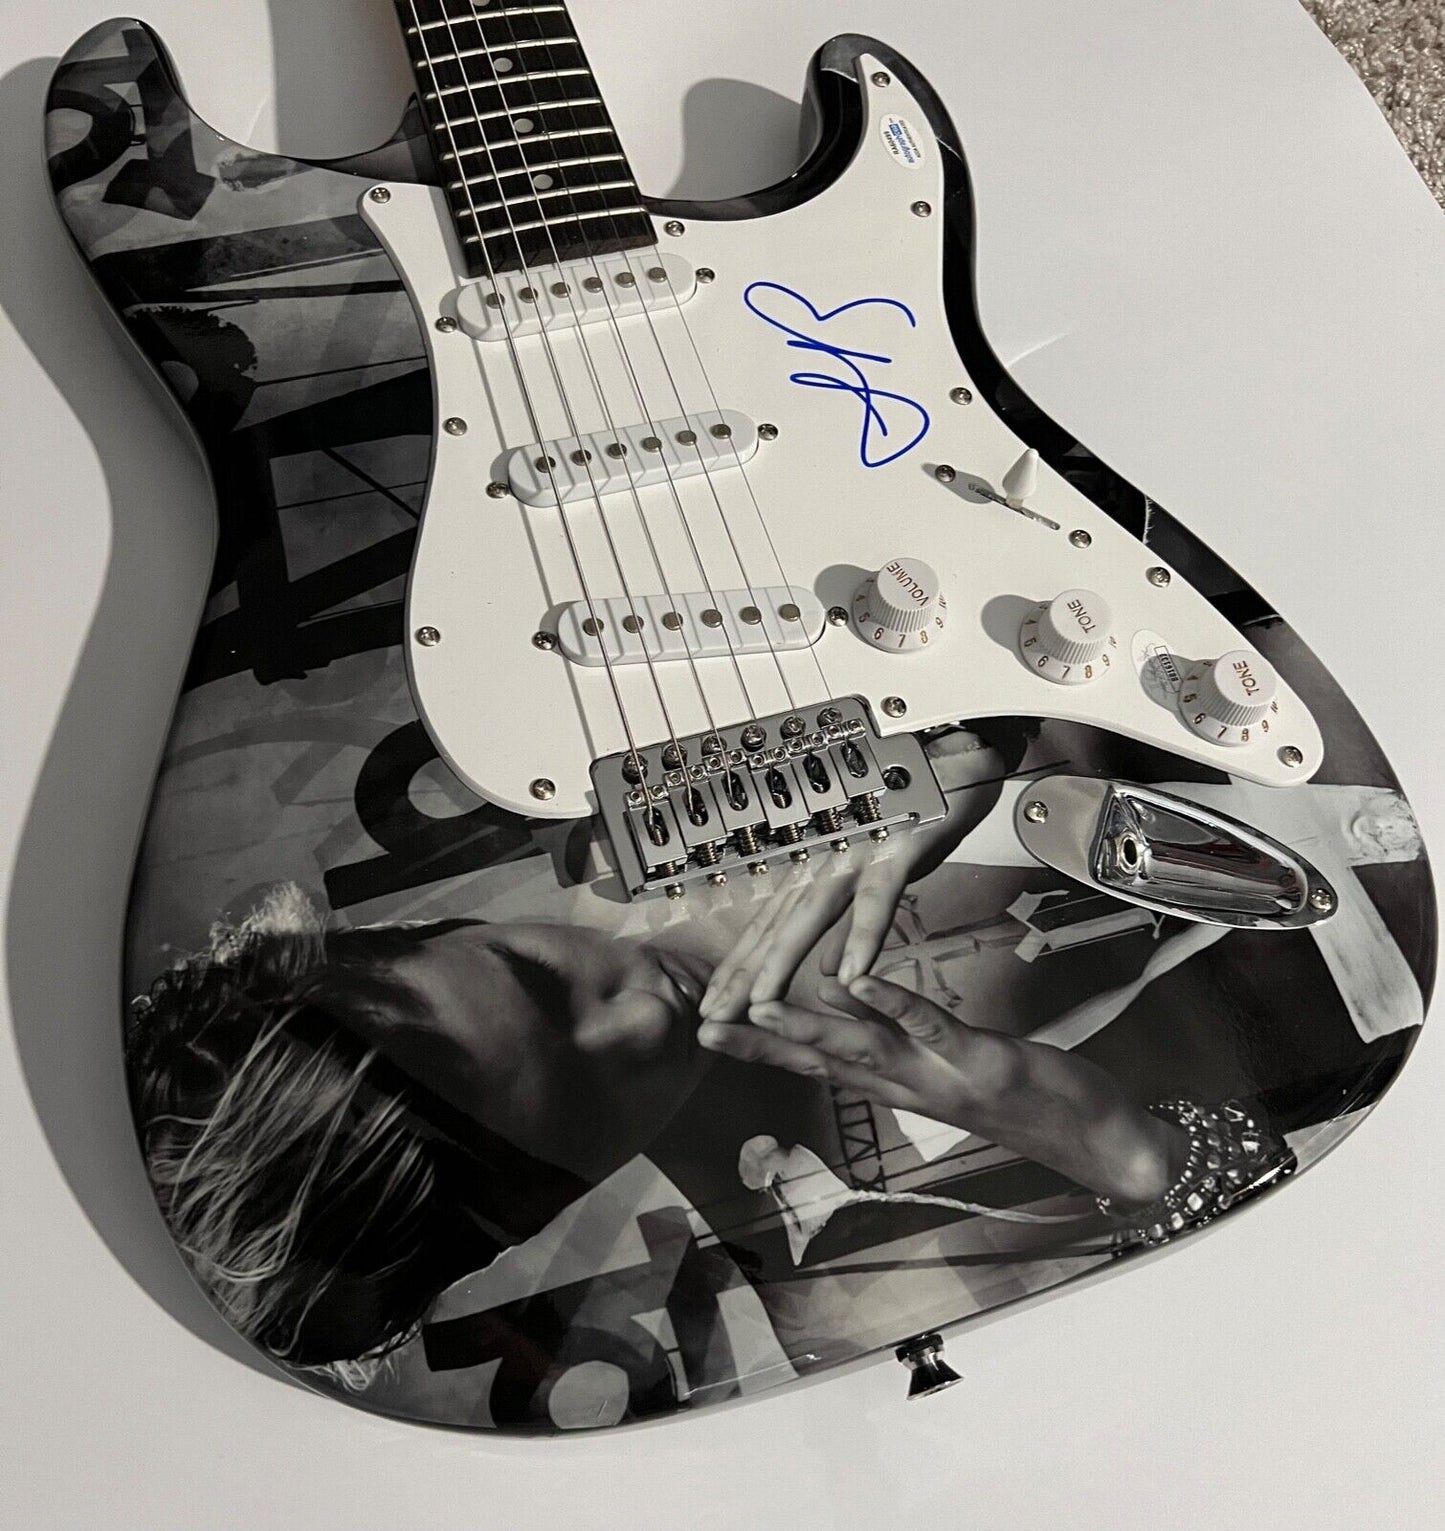 Justin Bieber JSA ACOA Autograph Signed Stratocaster Guitar Full Letter COA